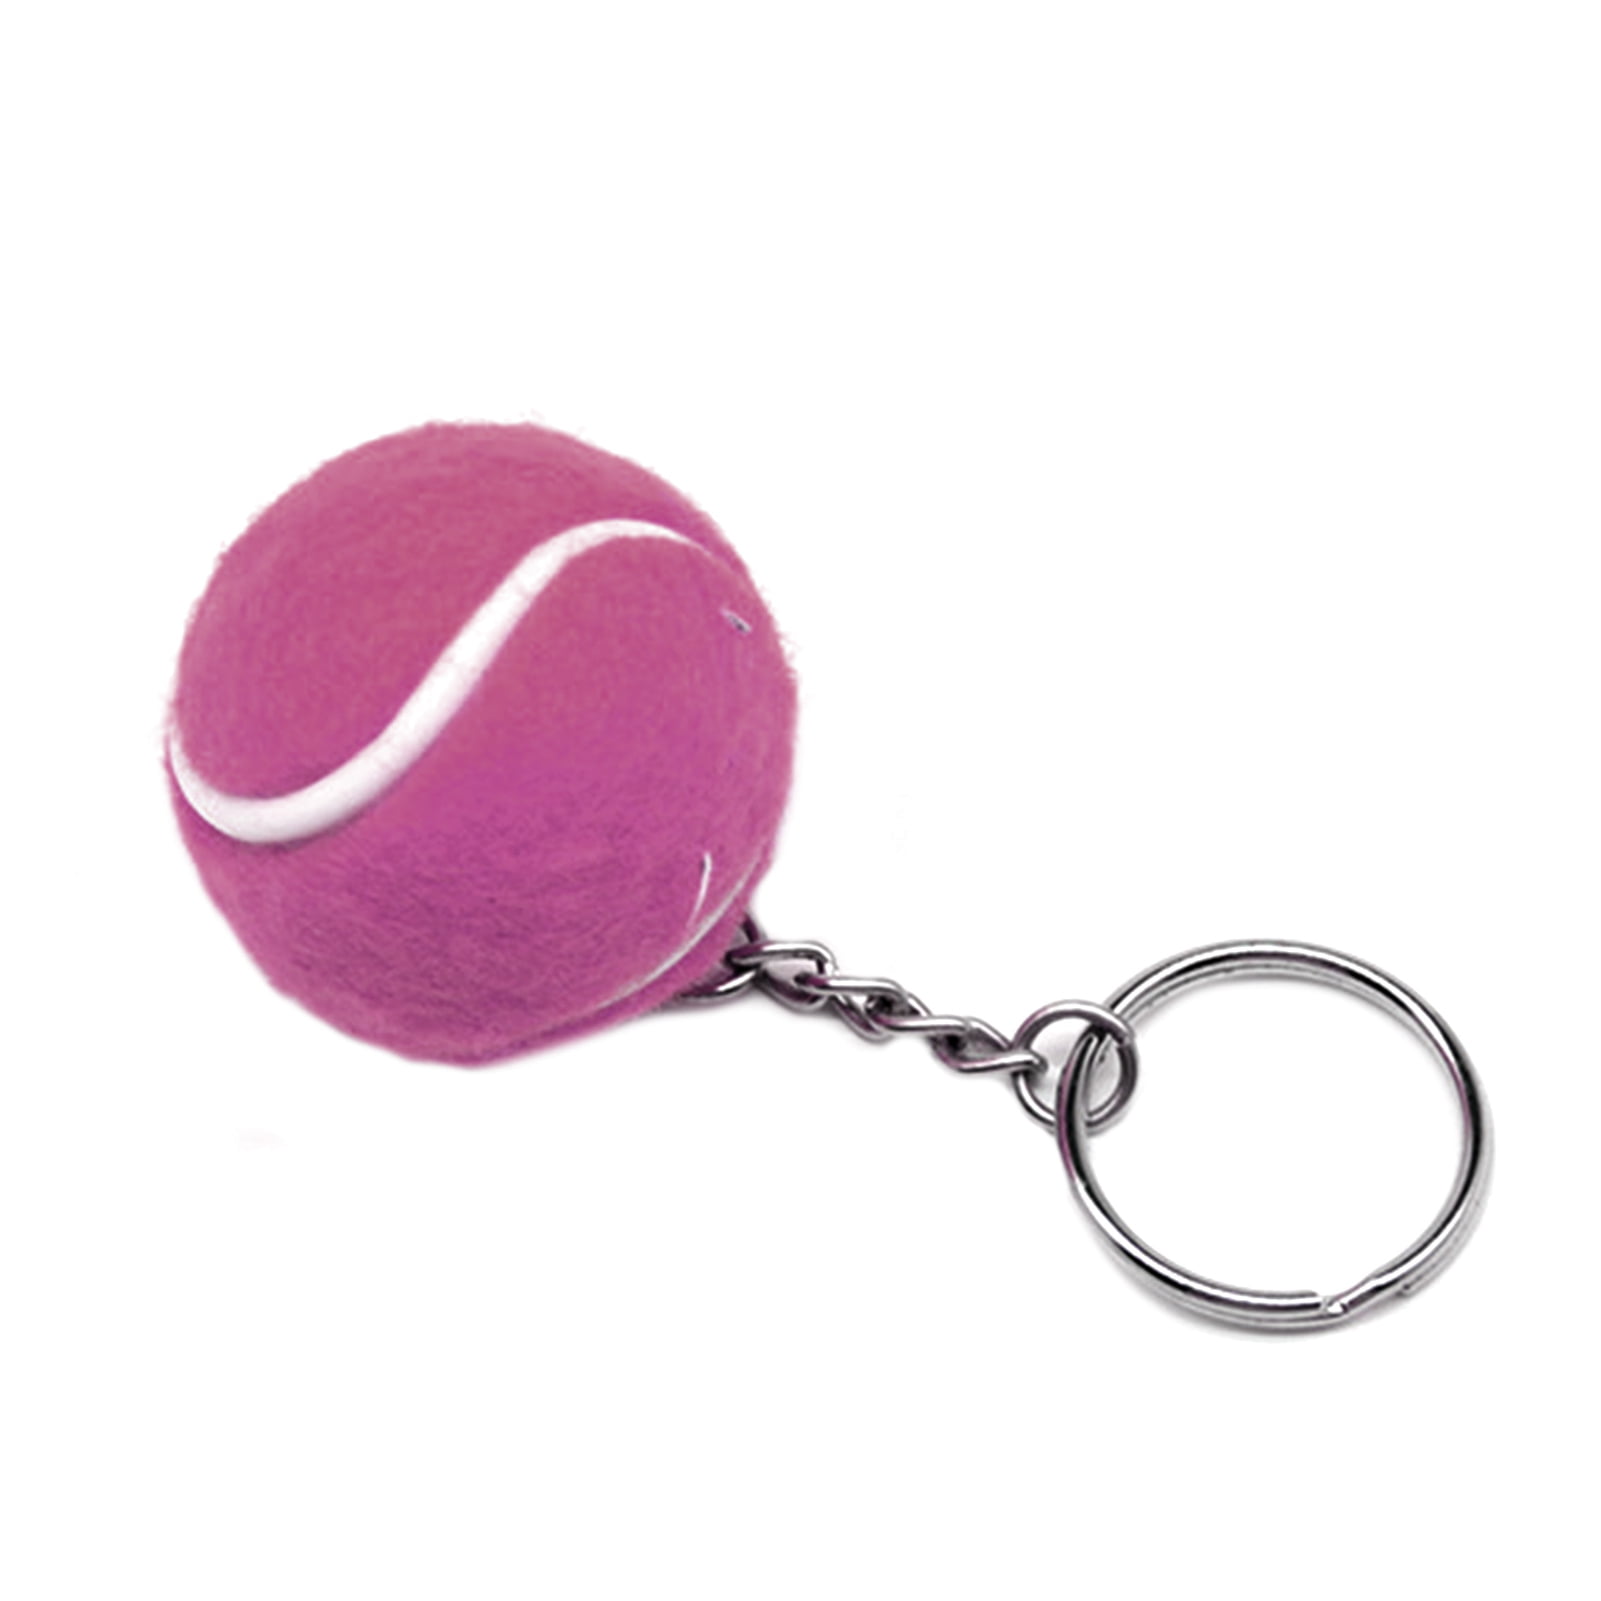 Sangmei Mini Tennis Ball Key Chain Key Ring Decoration Accessory Gift for Sport Fans 